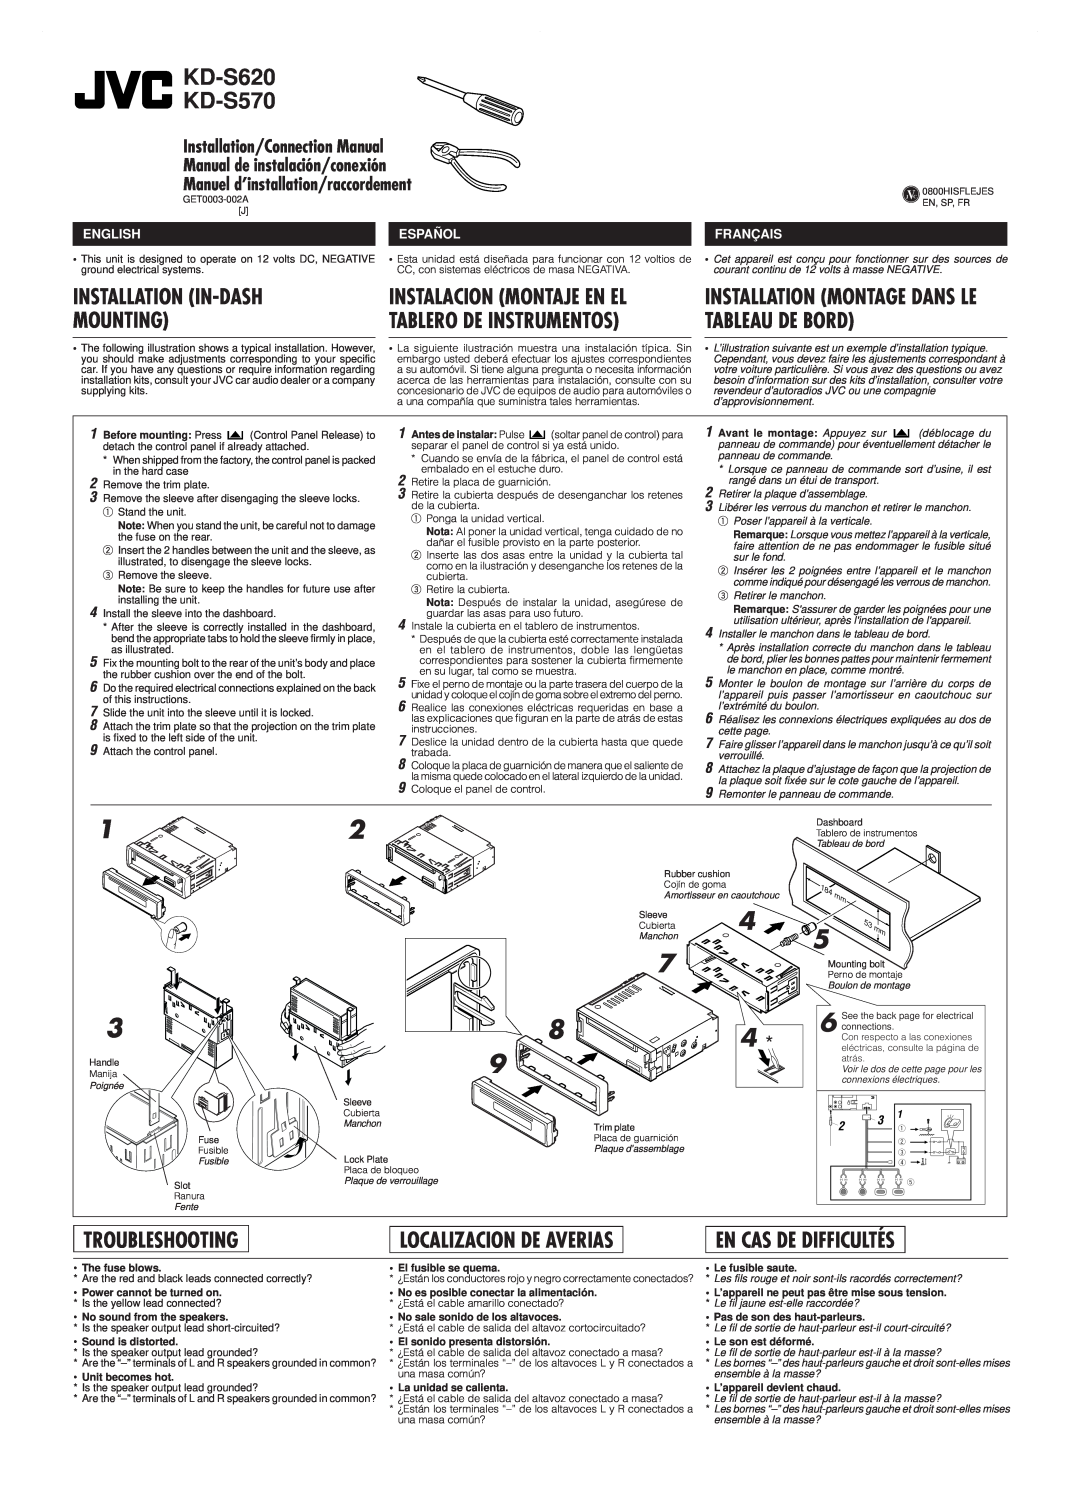 JVC KD-S620 manual Installation In-Dash Mounting, Troubleshooting, Localizacion De Averias, En Cas De Difficultés, English 